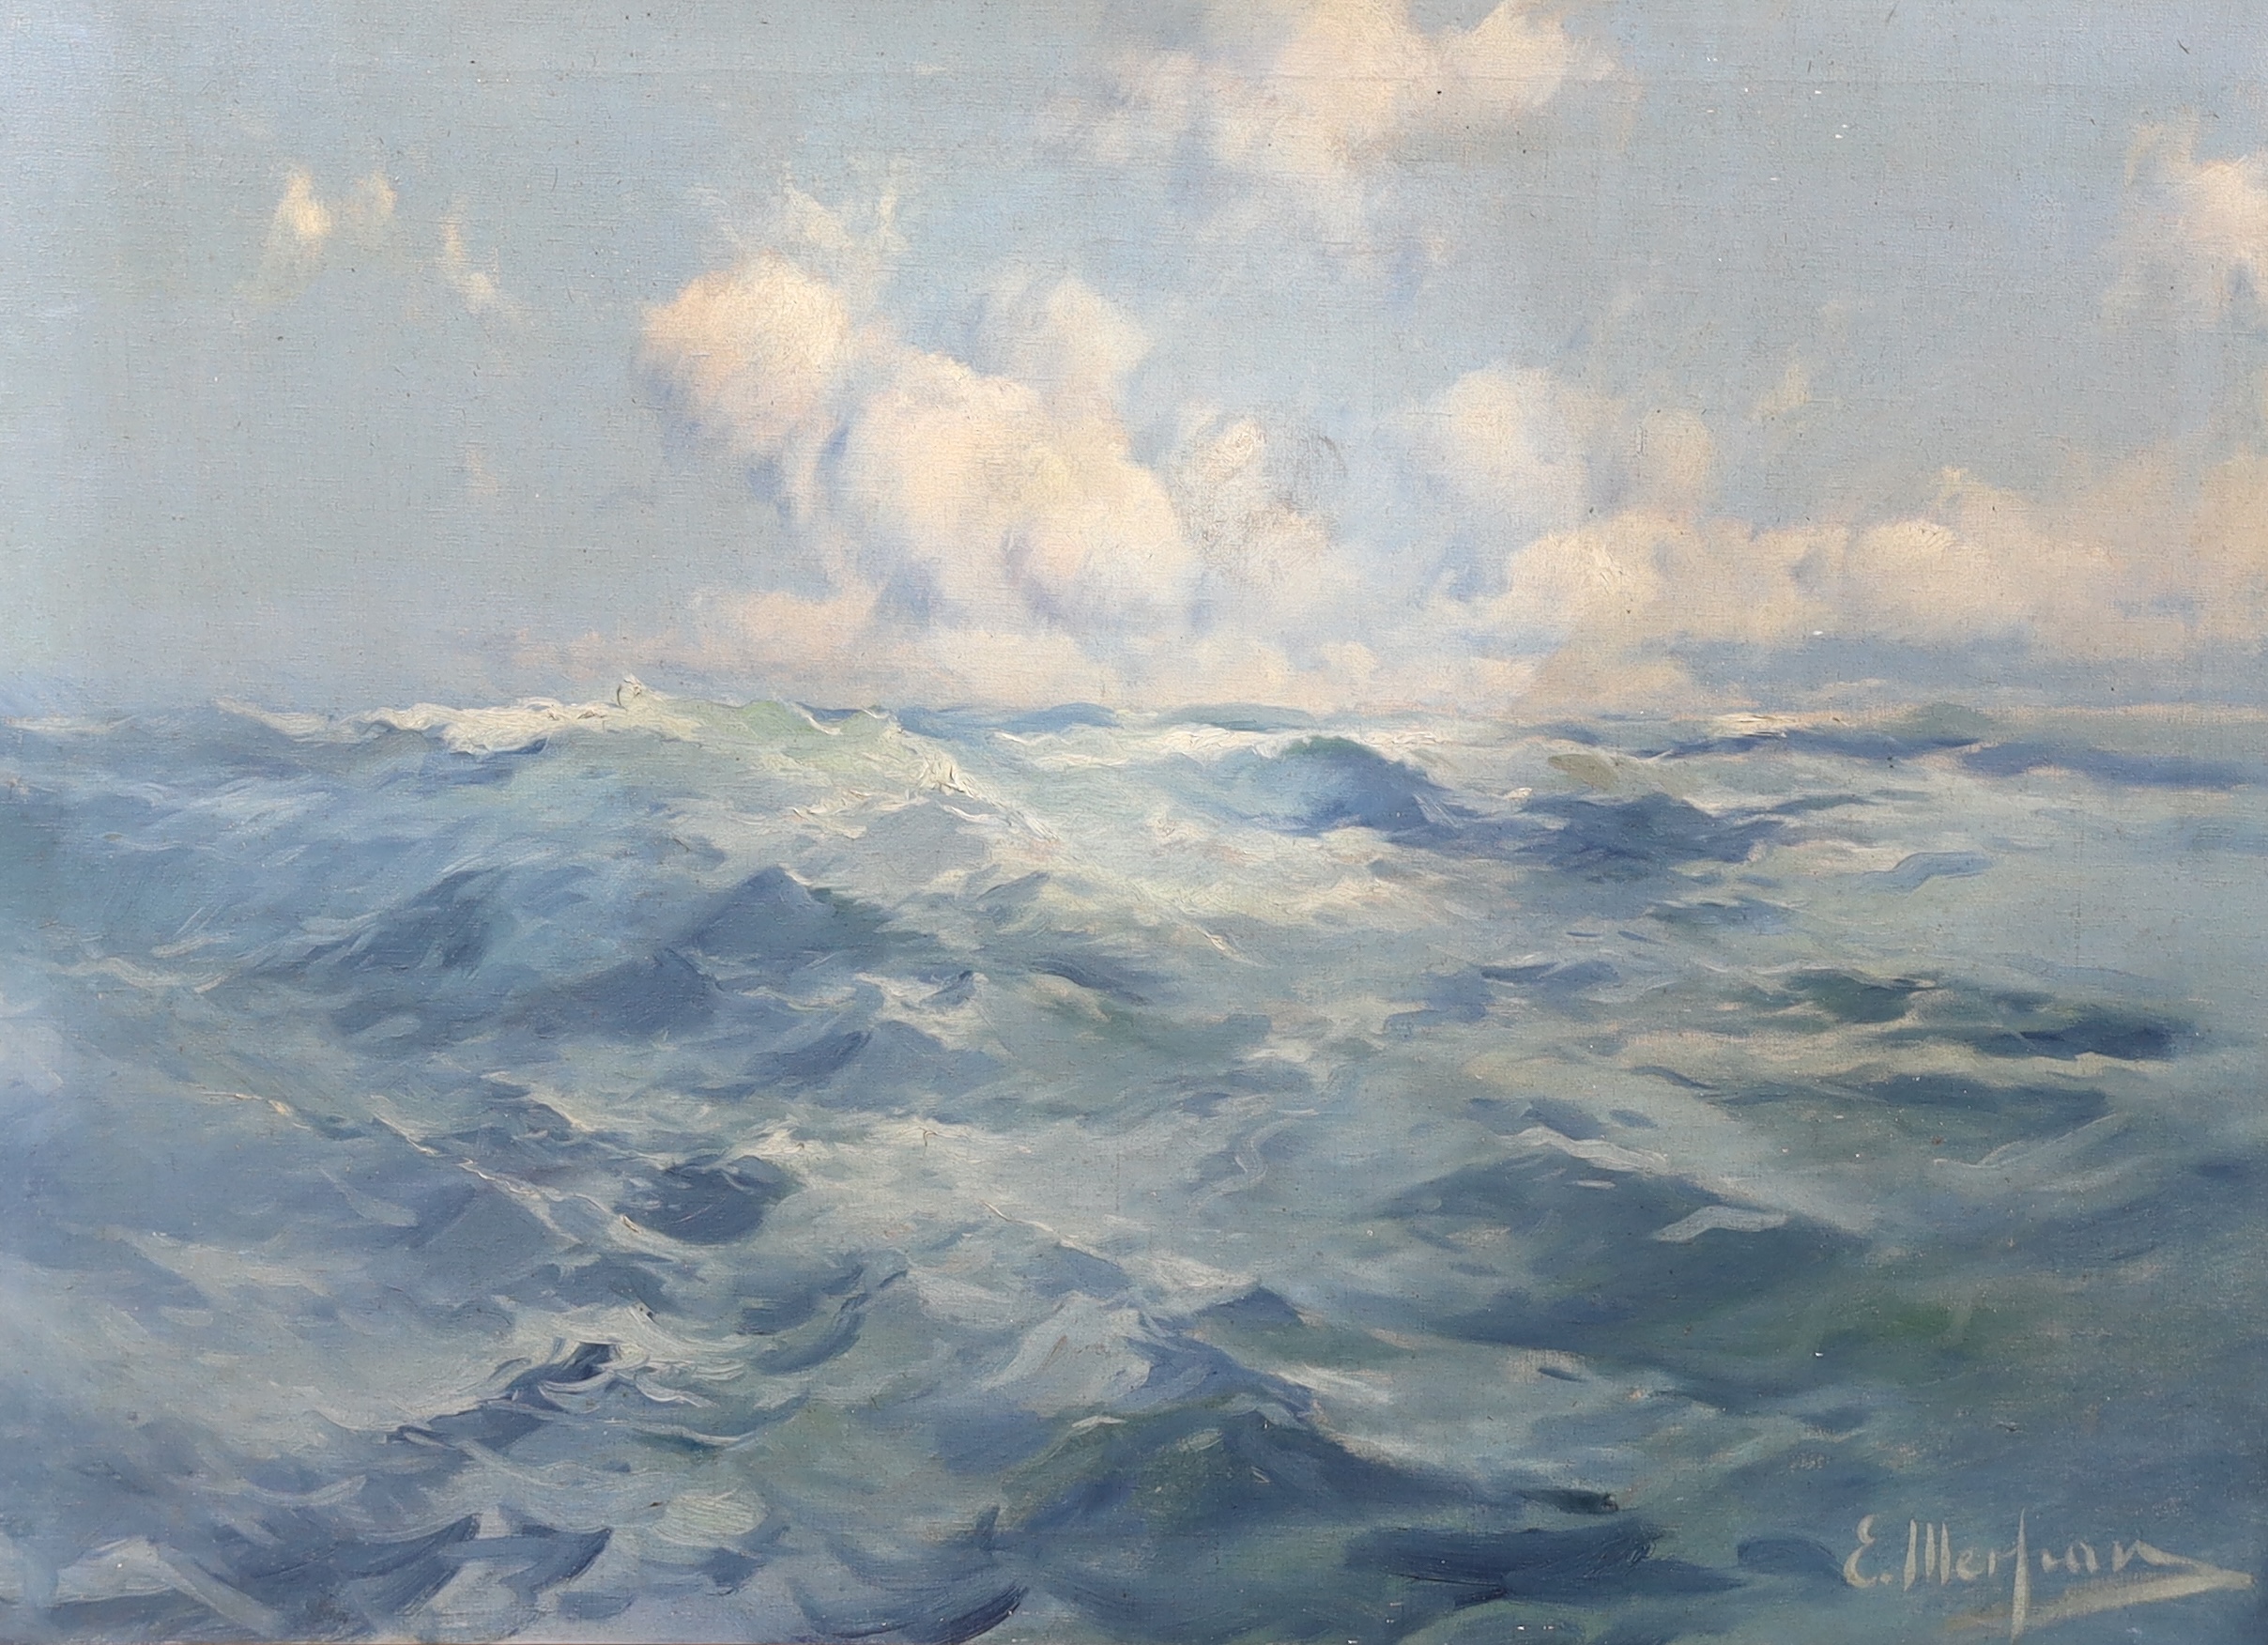 Eliseu Meifrèn i Roig (Spanish, 1859-1940), 'A study of the sea', oil on canvas, 54 x 74cm